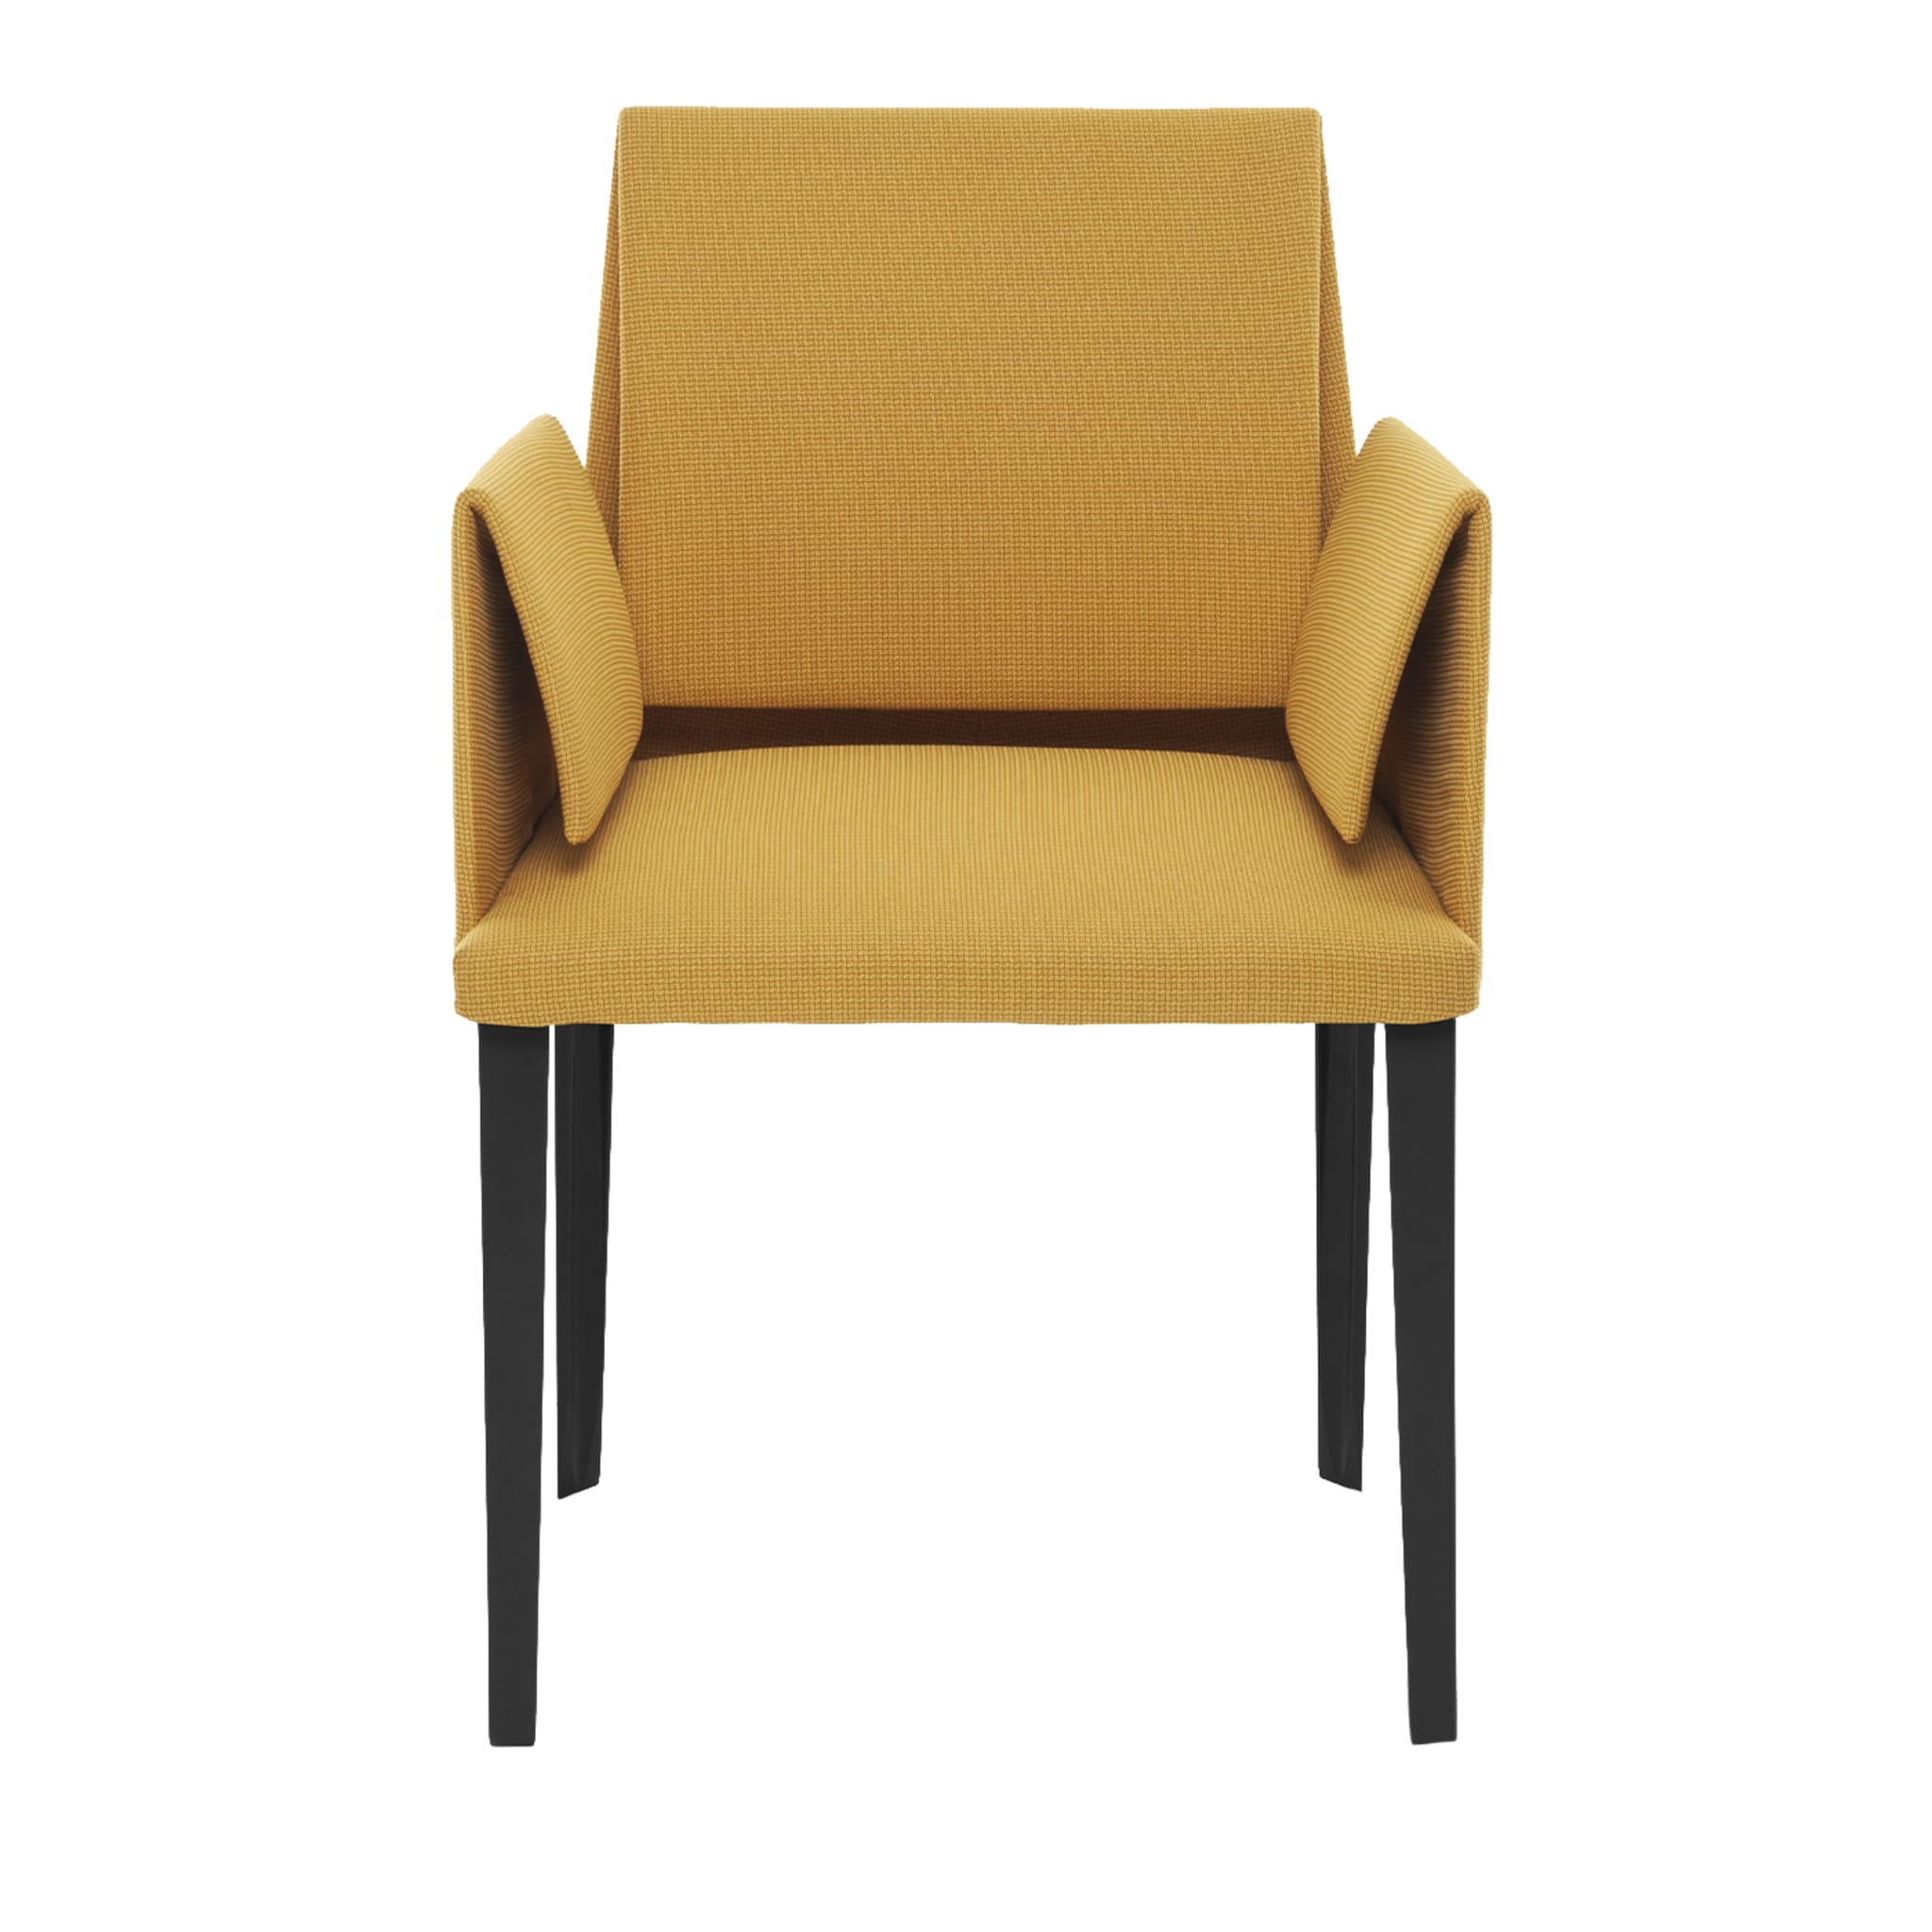 Marì 2015 Yellow Chair by Luigi Baroli - Main view